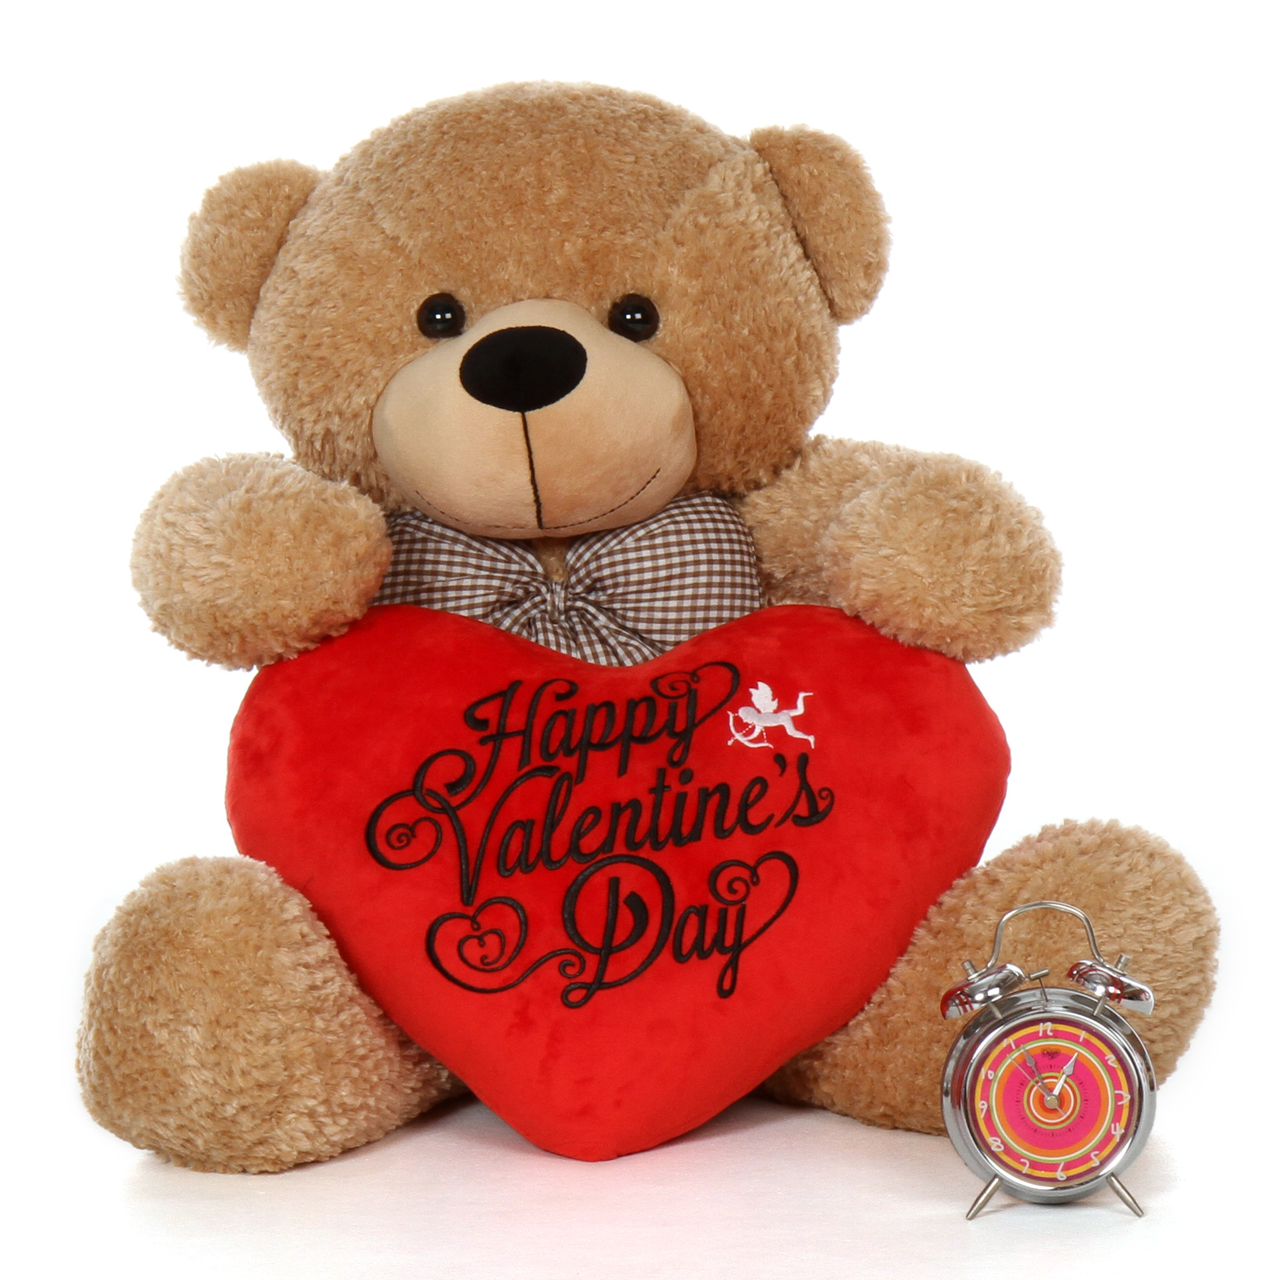 Debutante Love Bear GUND Plush Toy Stuffed Animal Teddy Valentines Heart for sale online 